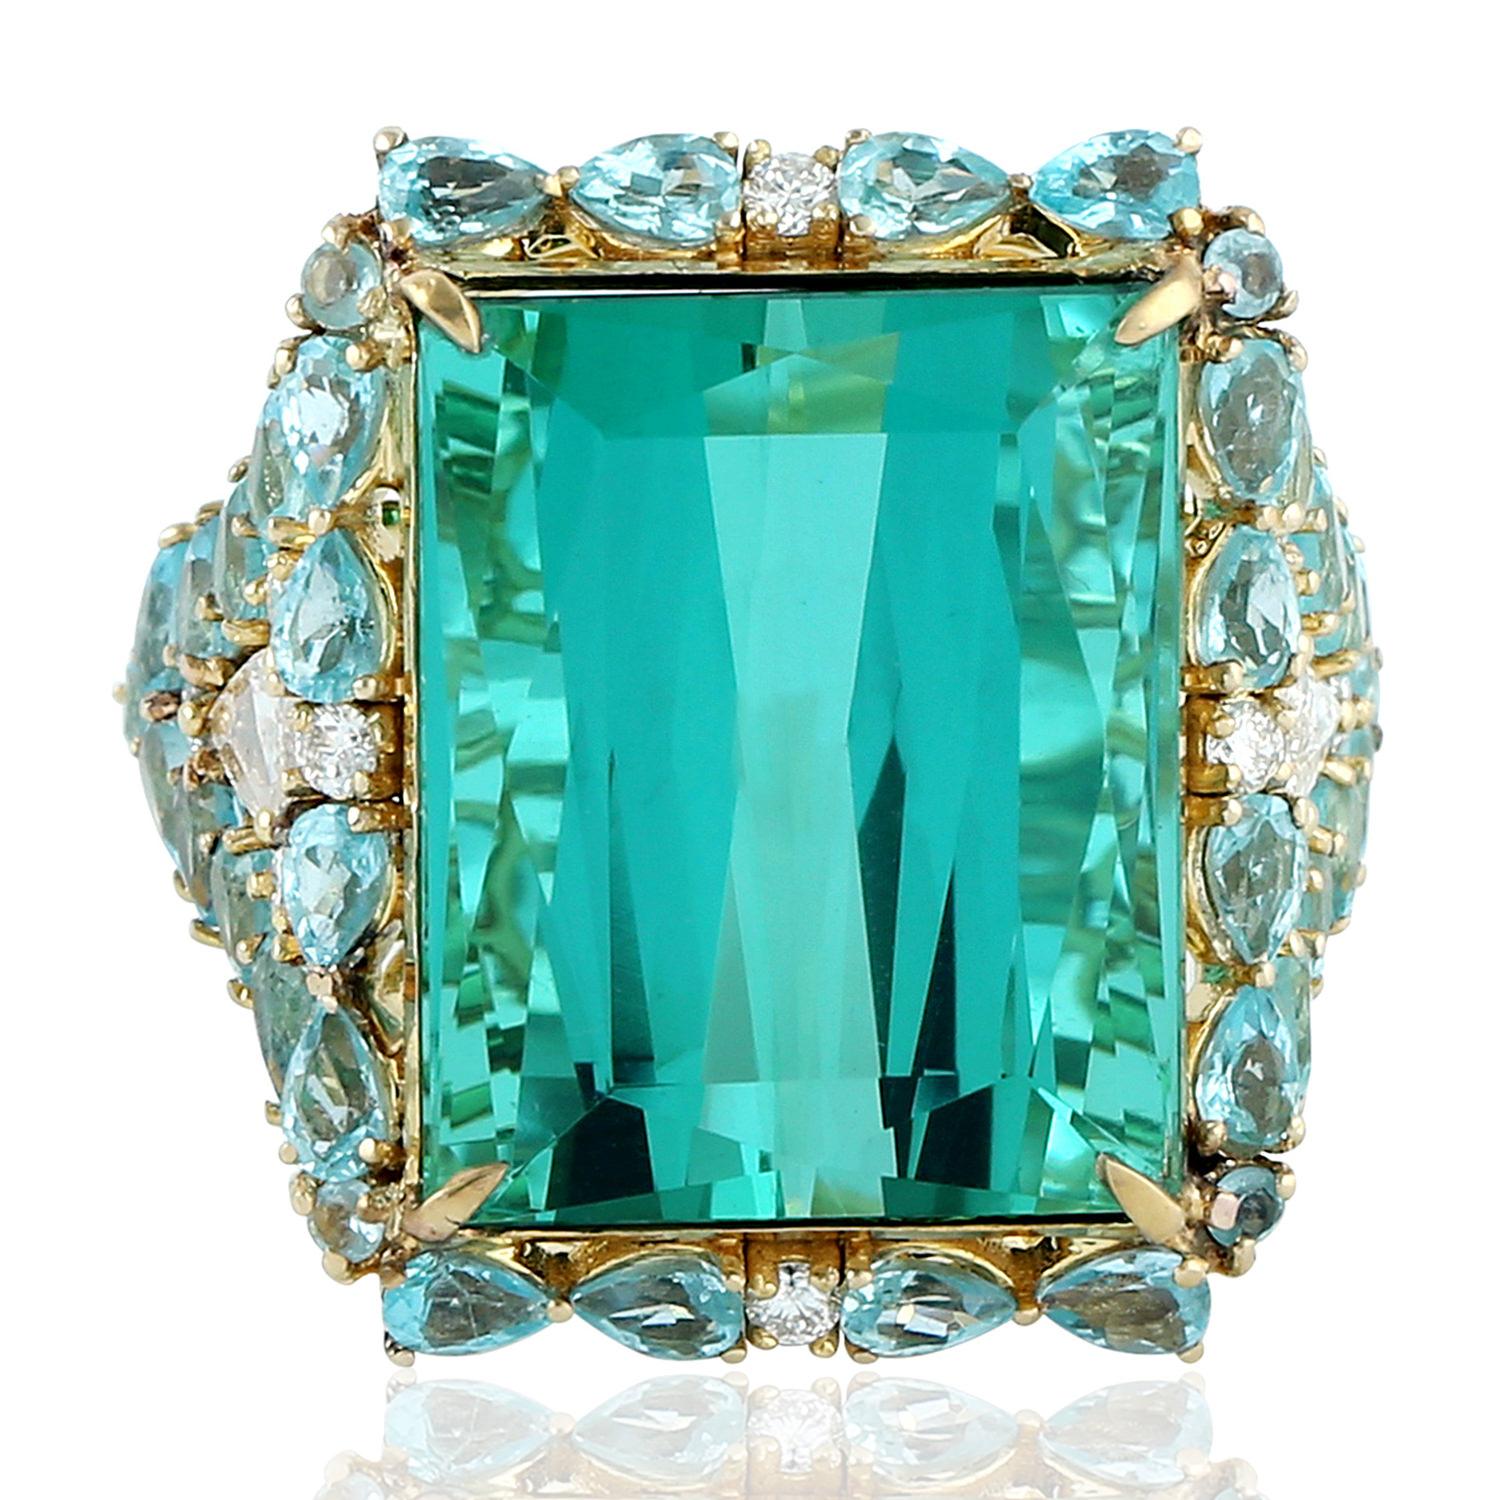 Mixed Cut 19.31 Carat Apatite Tourmaline Diamond 18 Karat Gold Ring For Sale